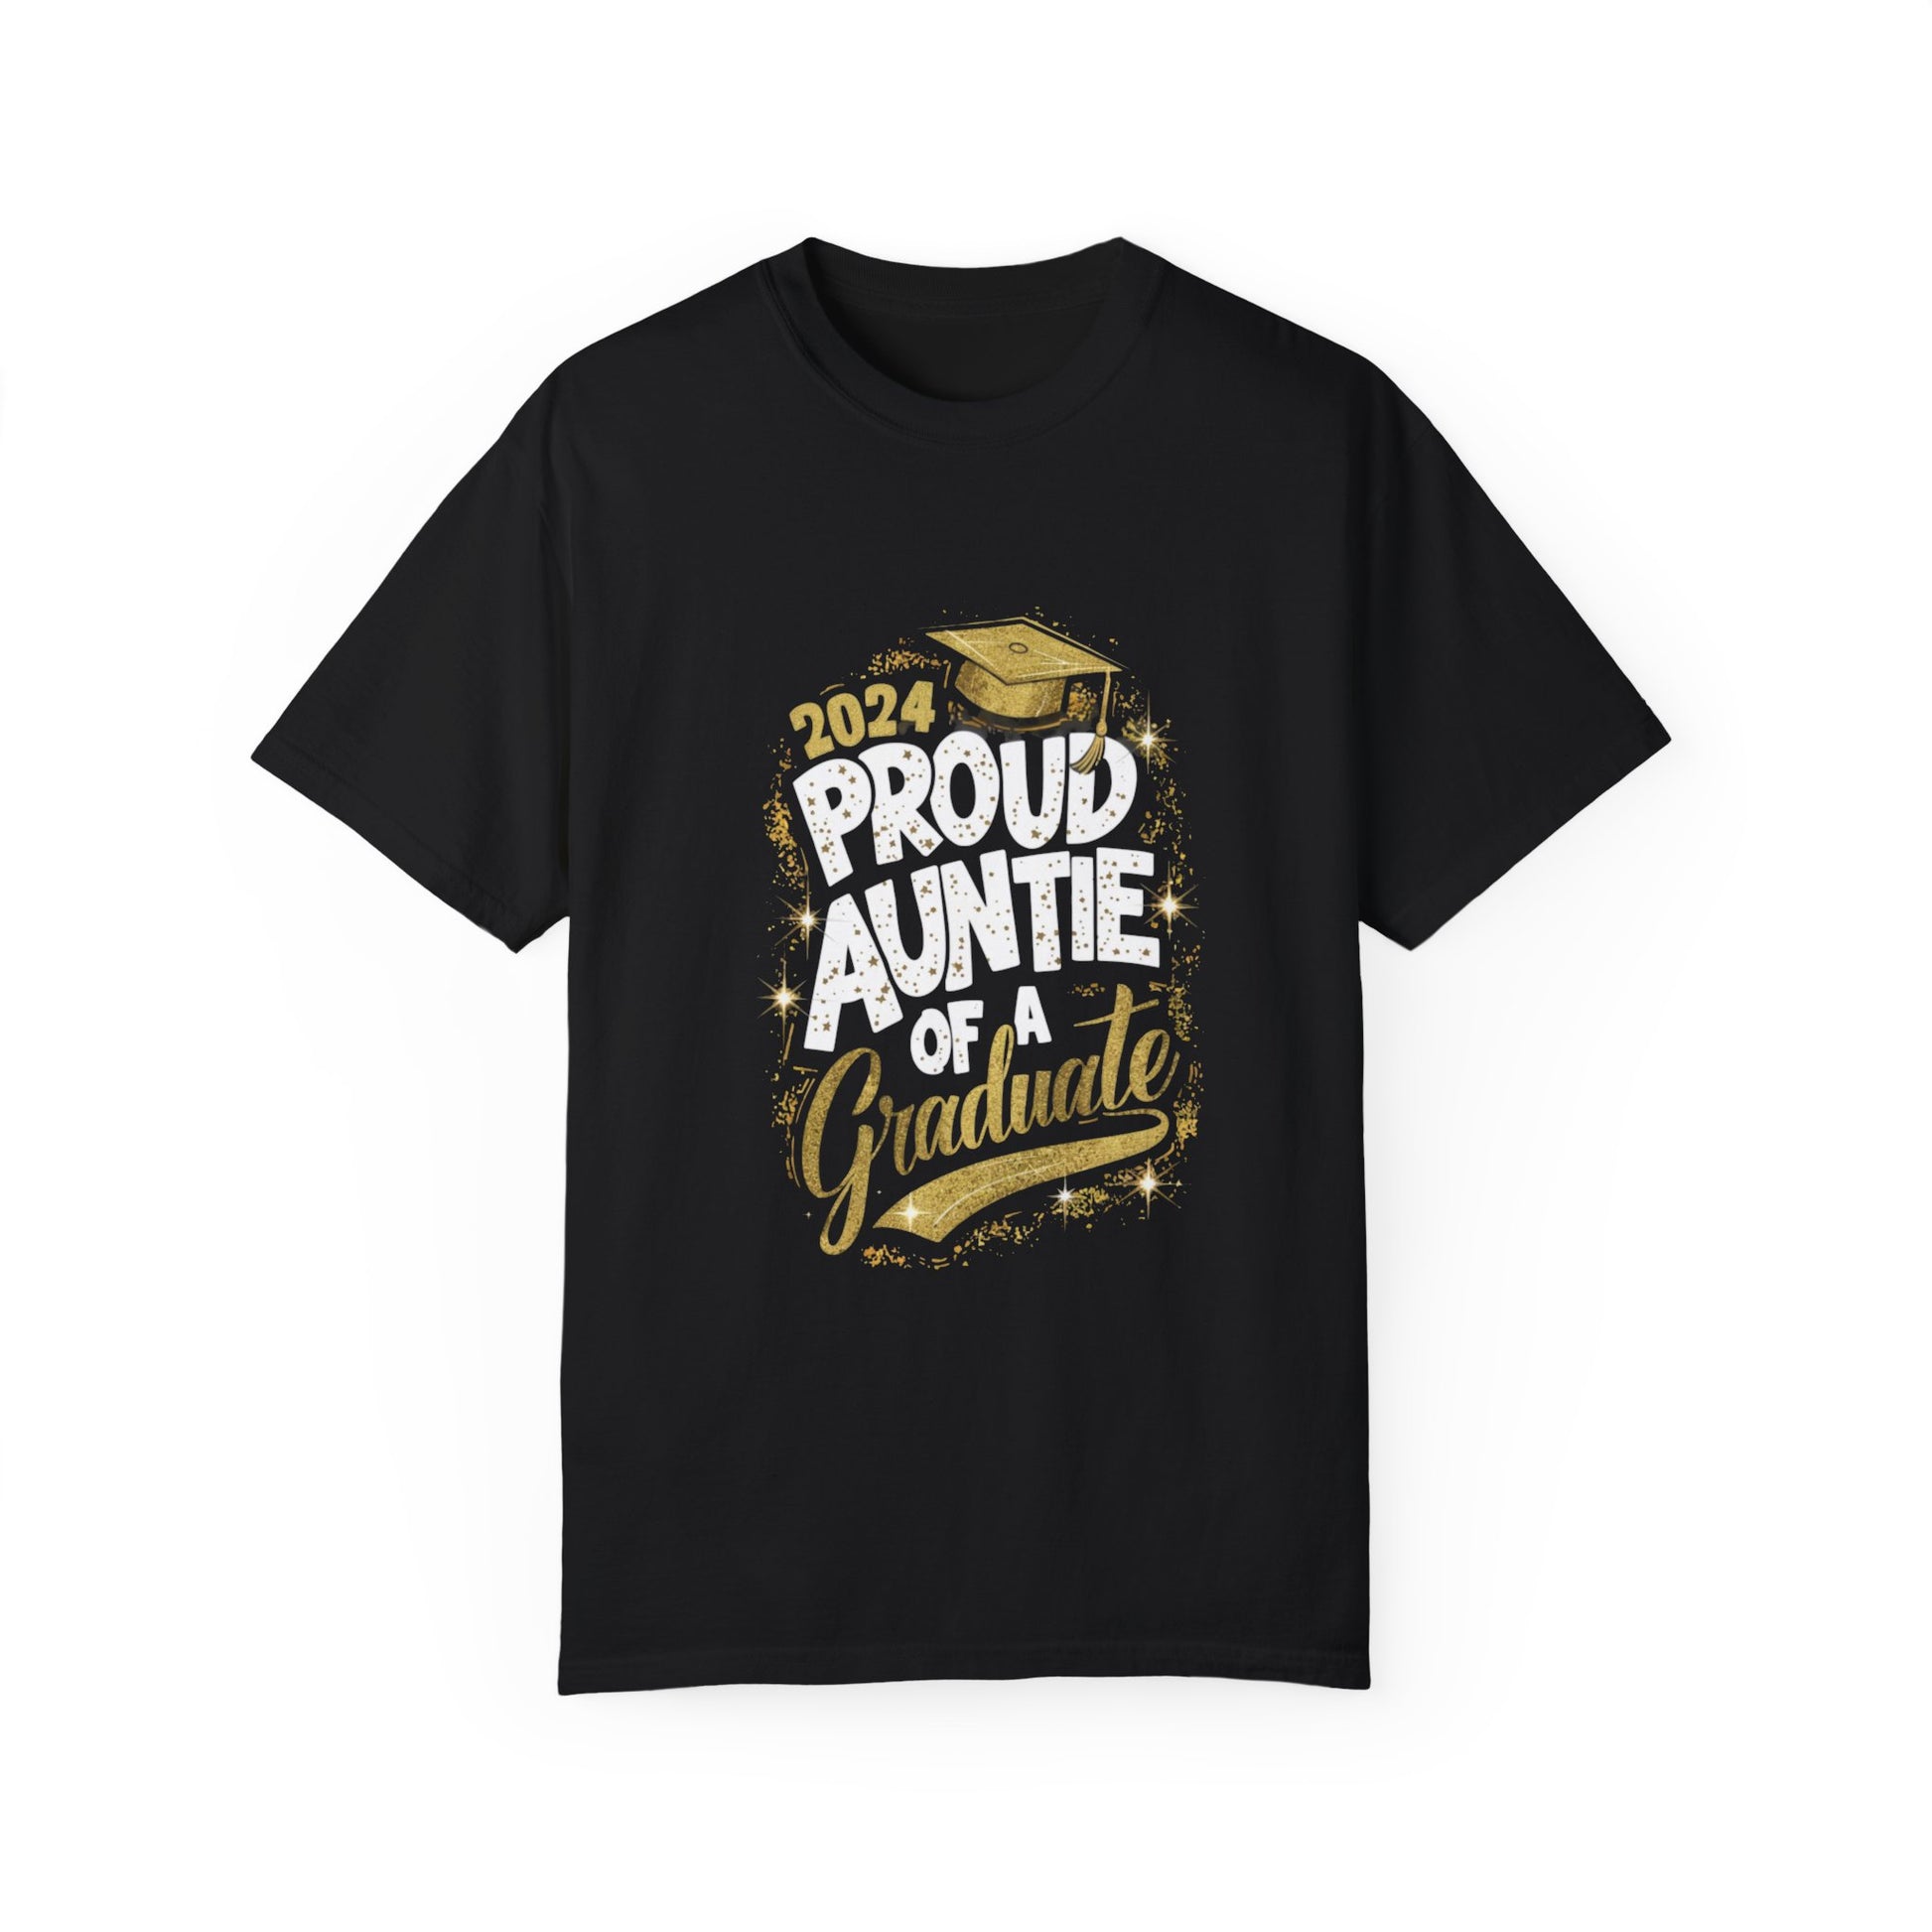 Proud Auntie of a 2024 Graduate Unisex Garment-dyed T-shirt Cotton Funny Humorous Graphic Soft Premium Unisex Men Women Black T-shirt Birthday Gift-1